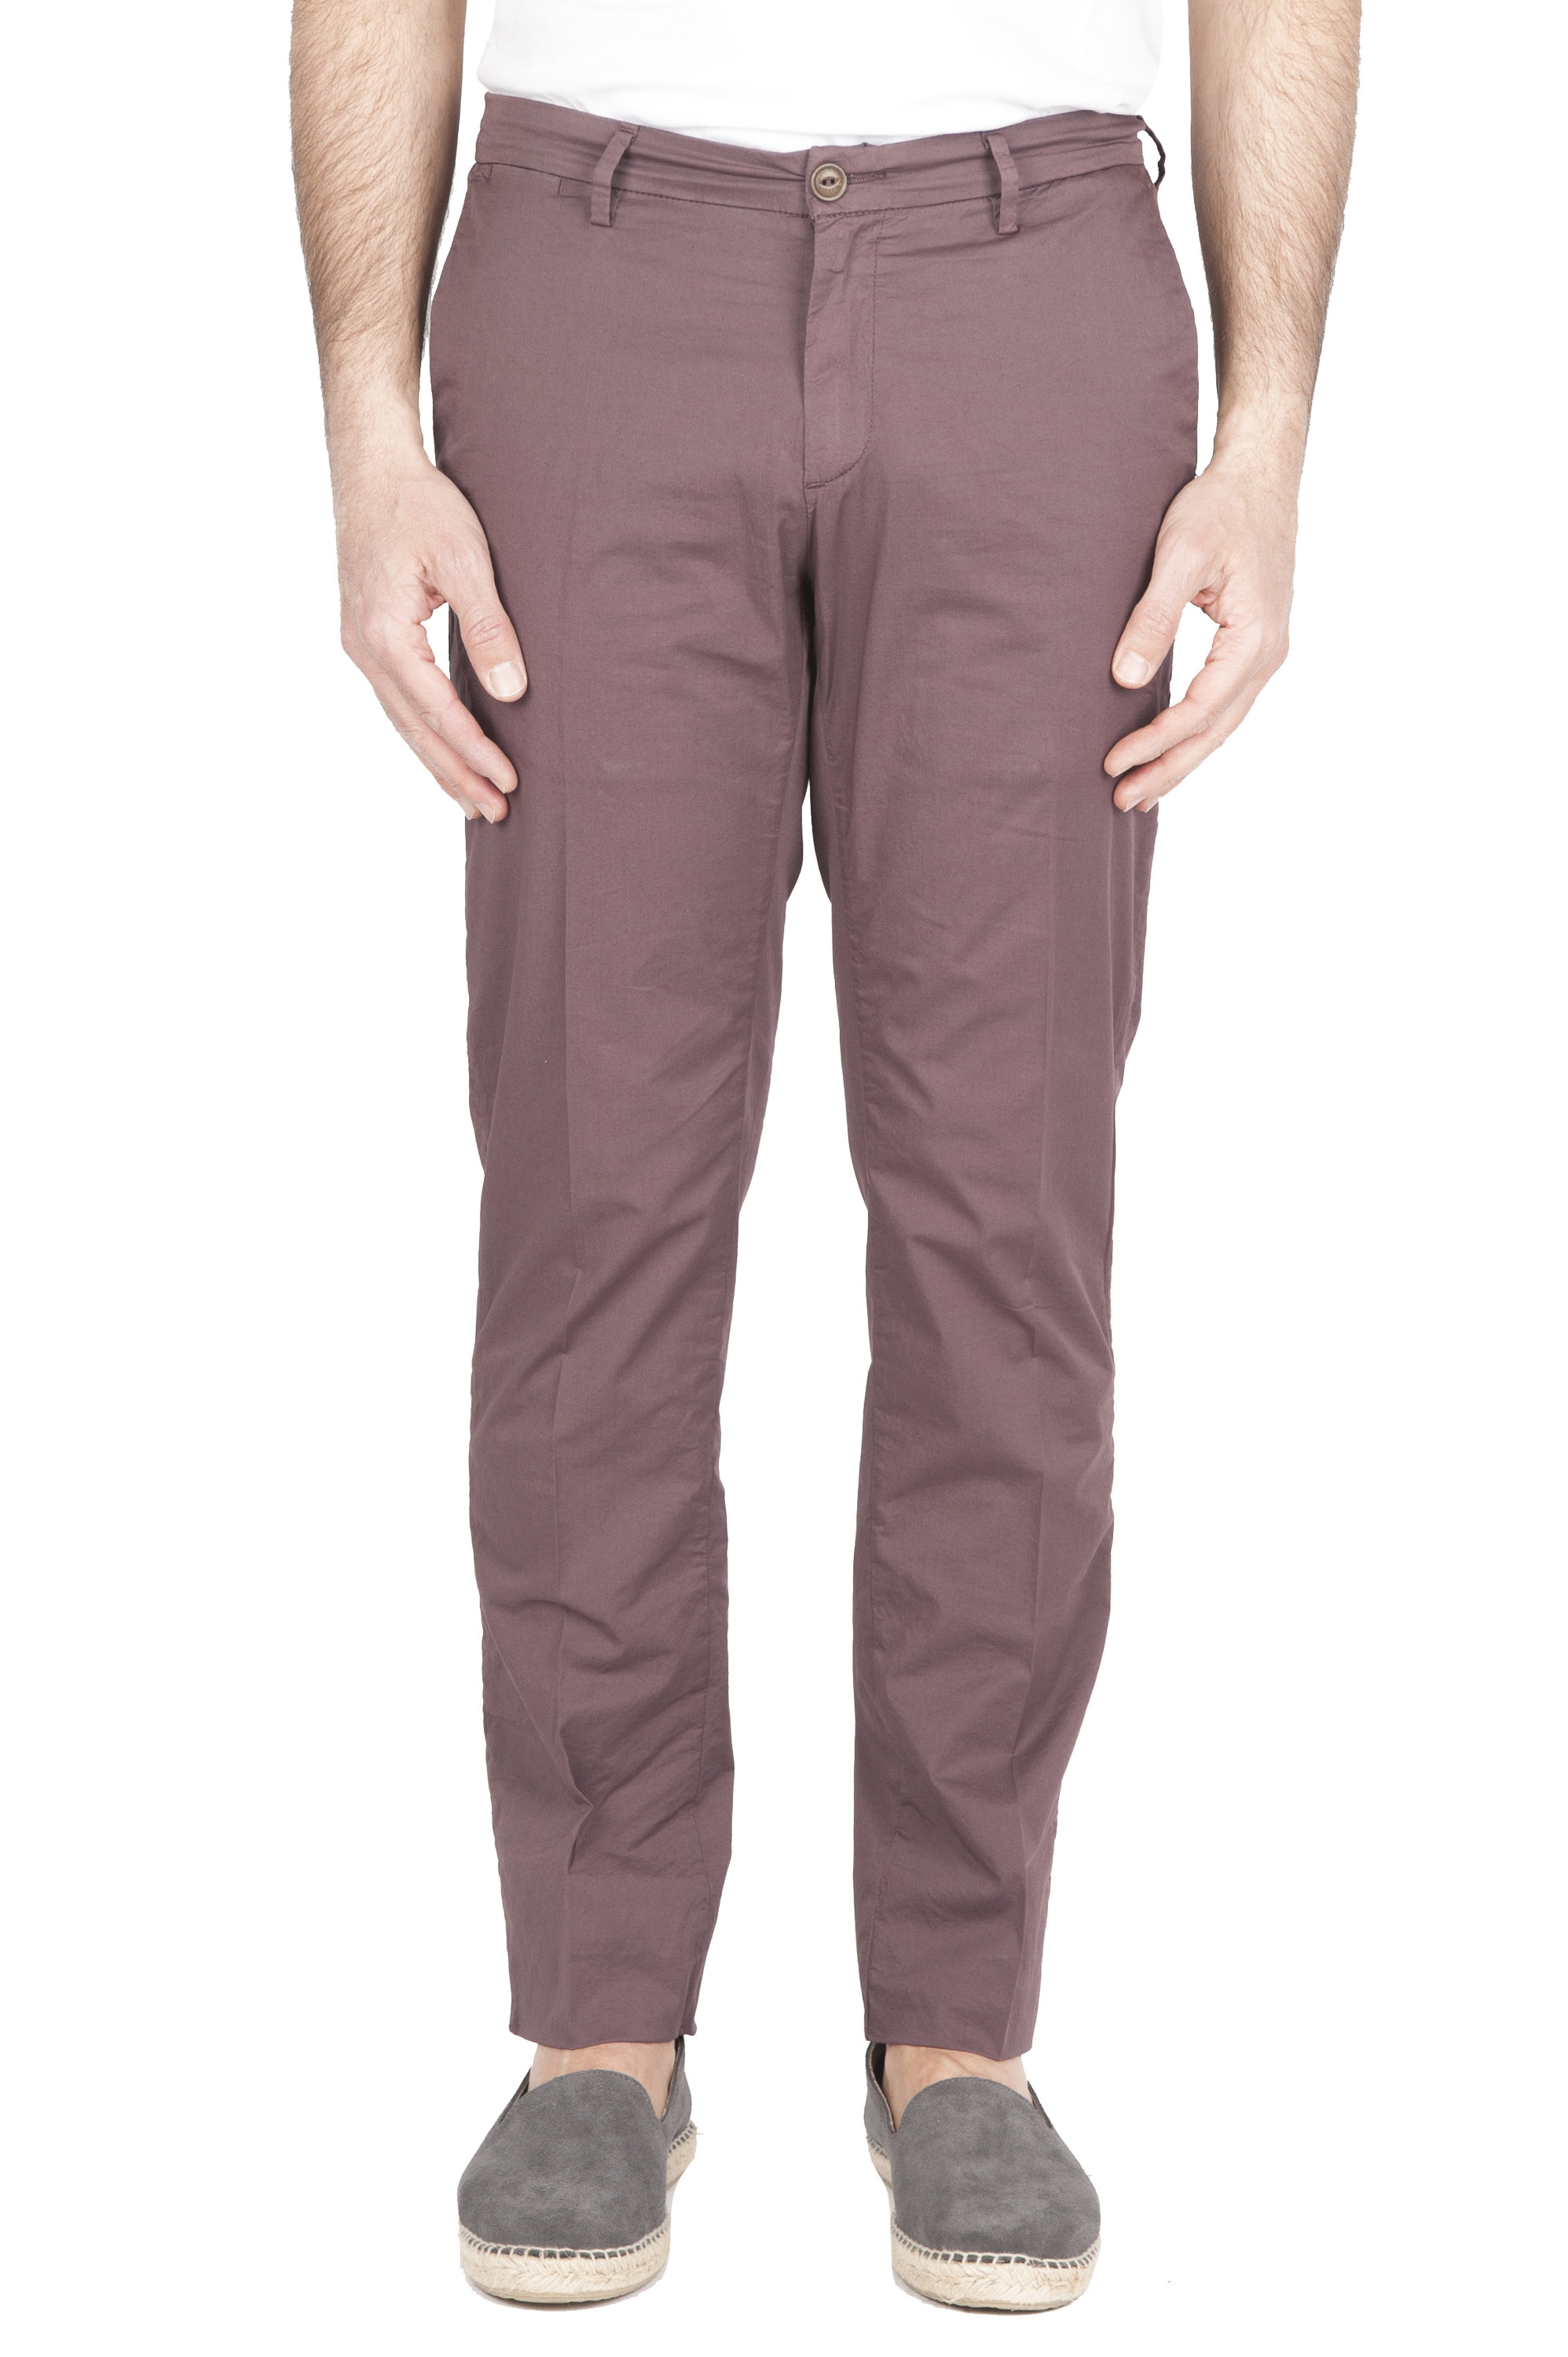 SBU 01779 Ultra-light chino pants in bordeaux stretch cotton 01